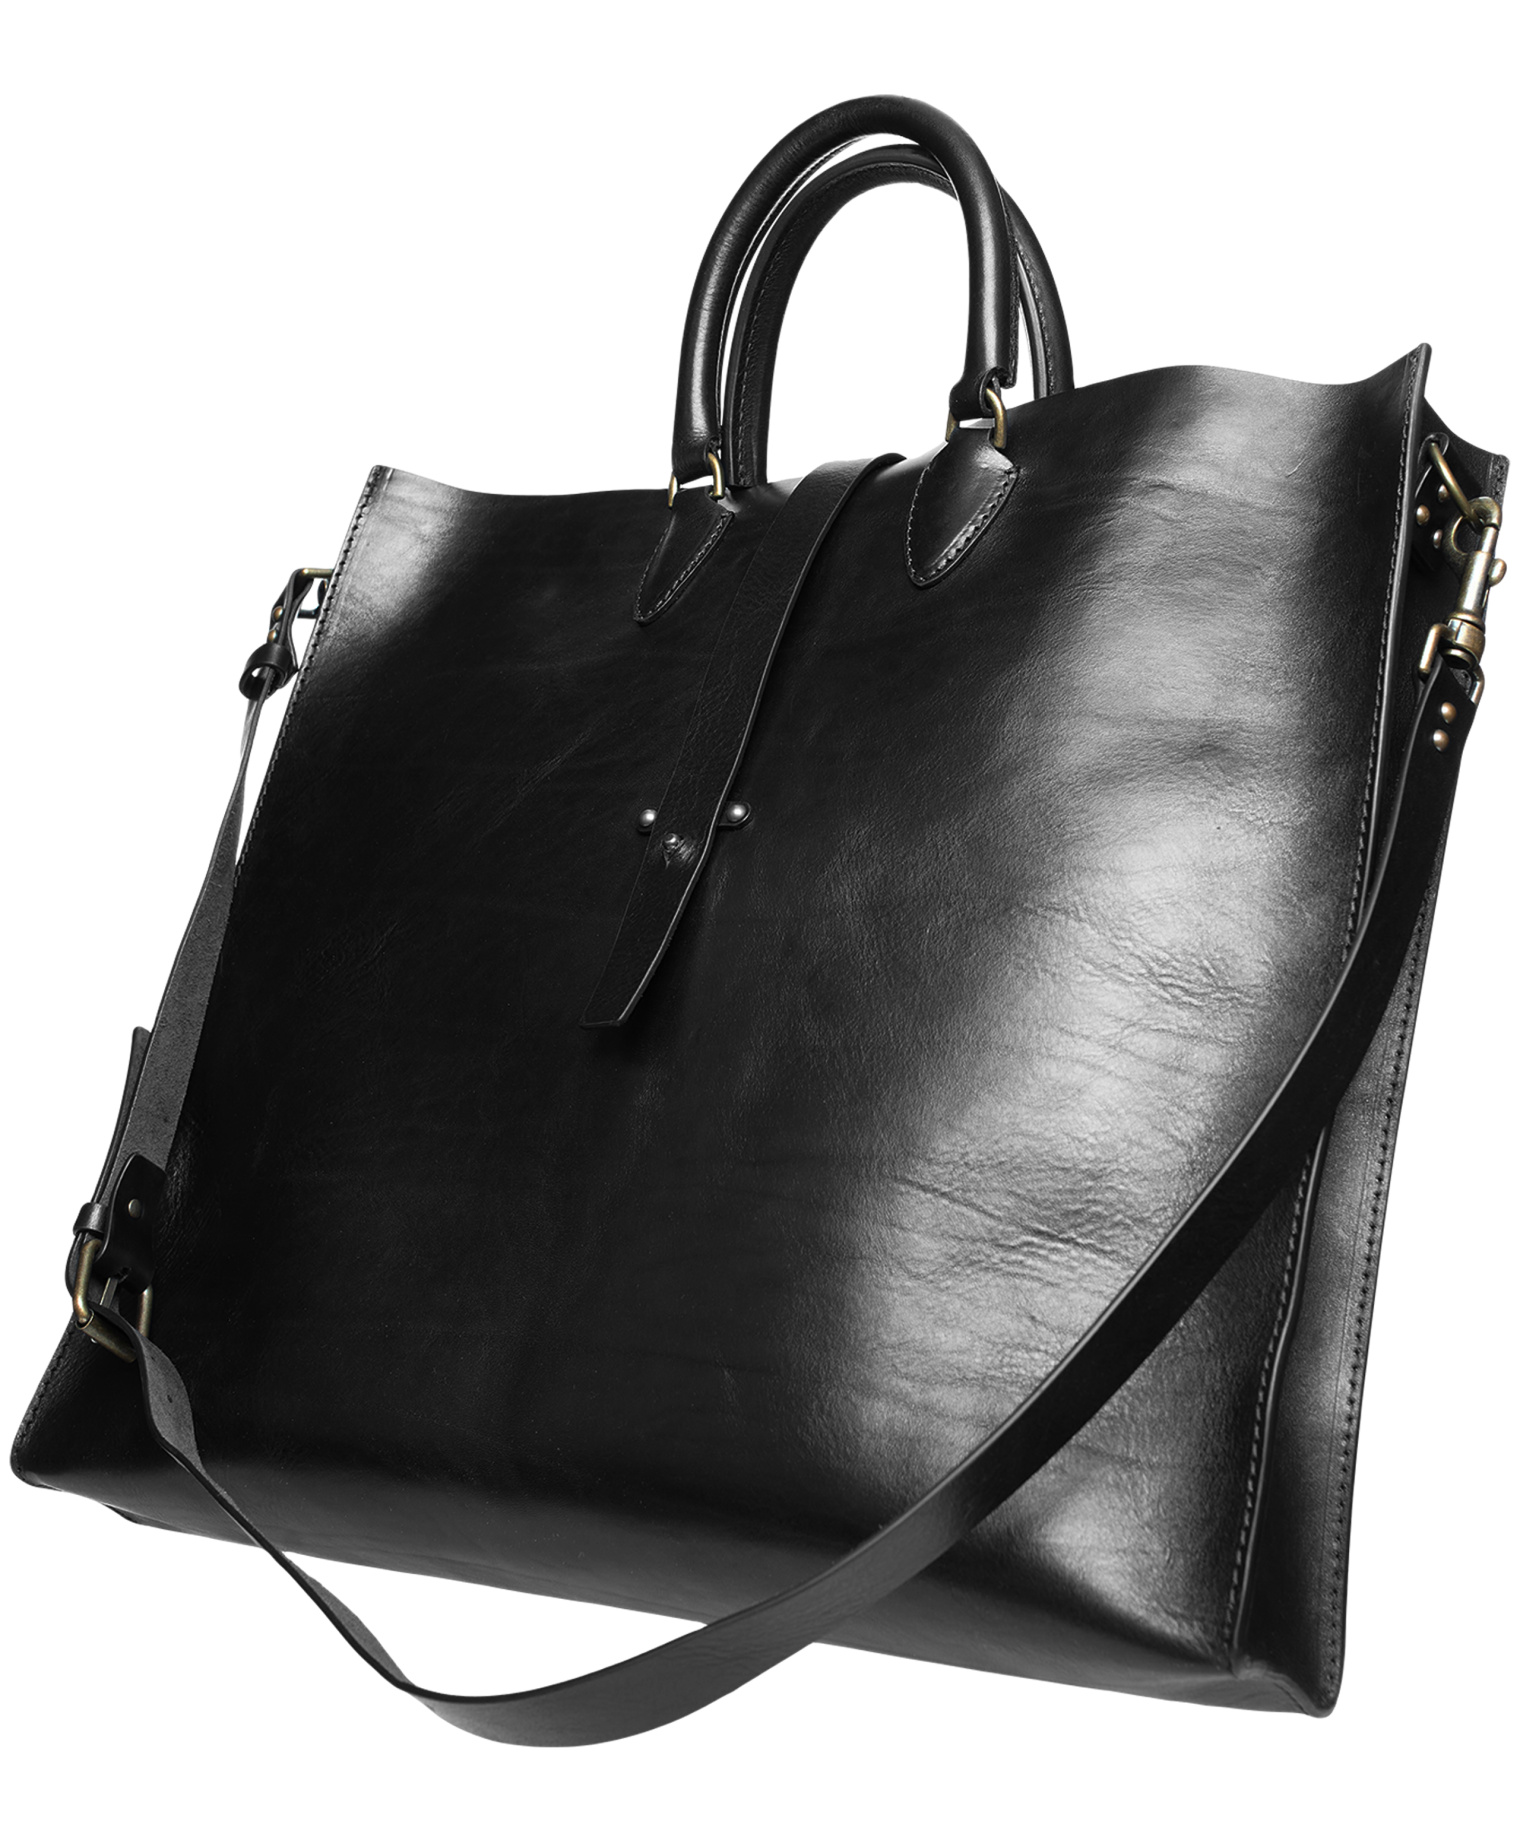 Ziggy Chen Black leather bag